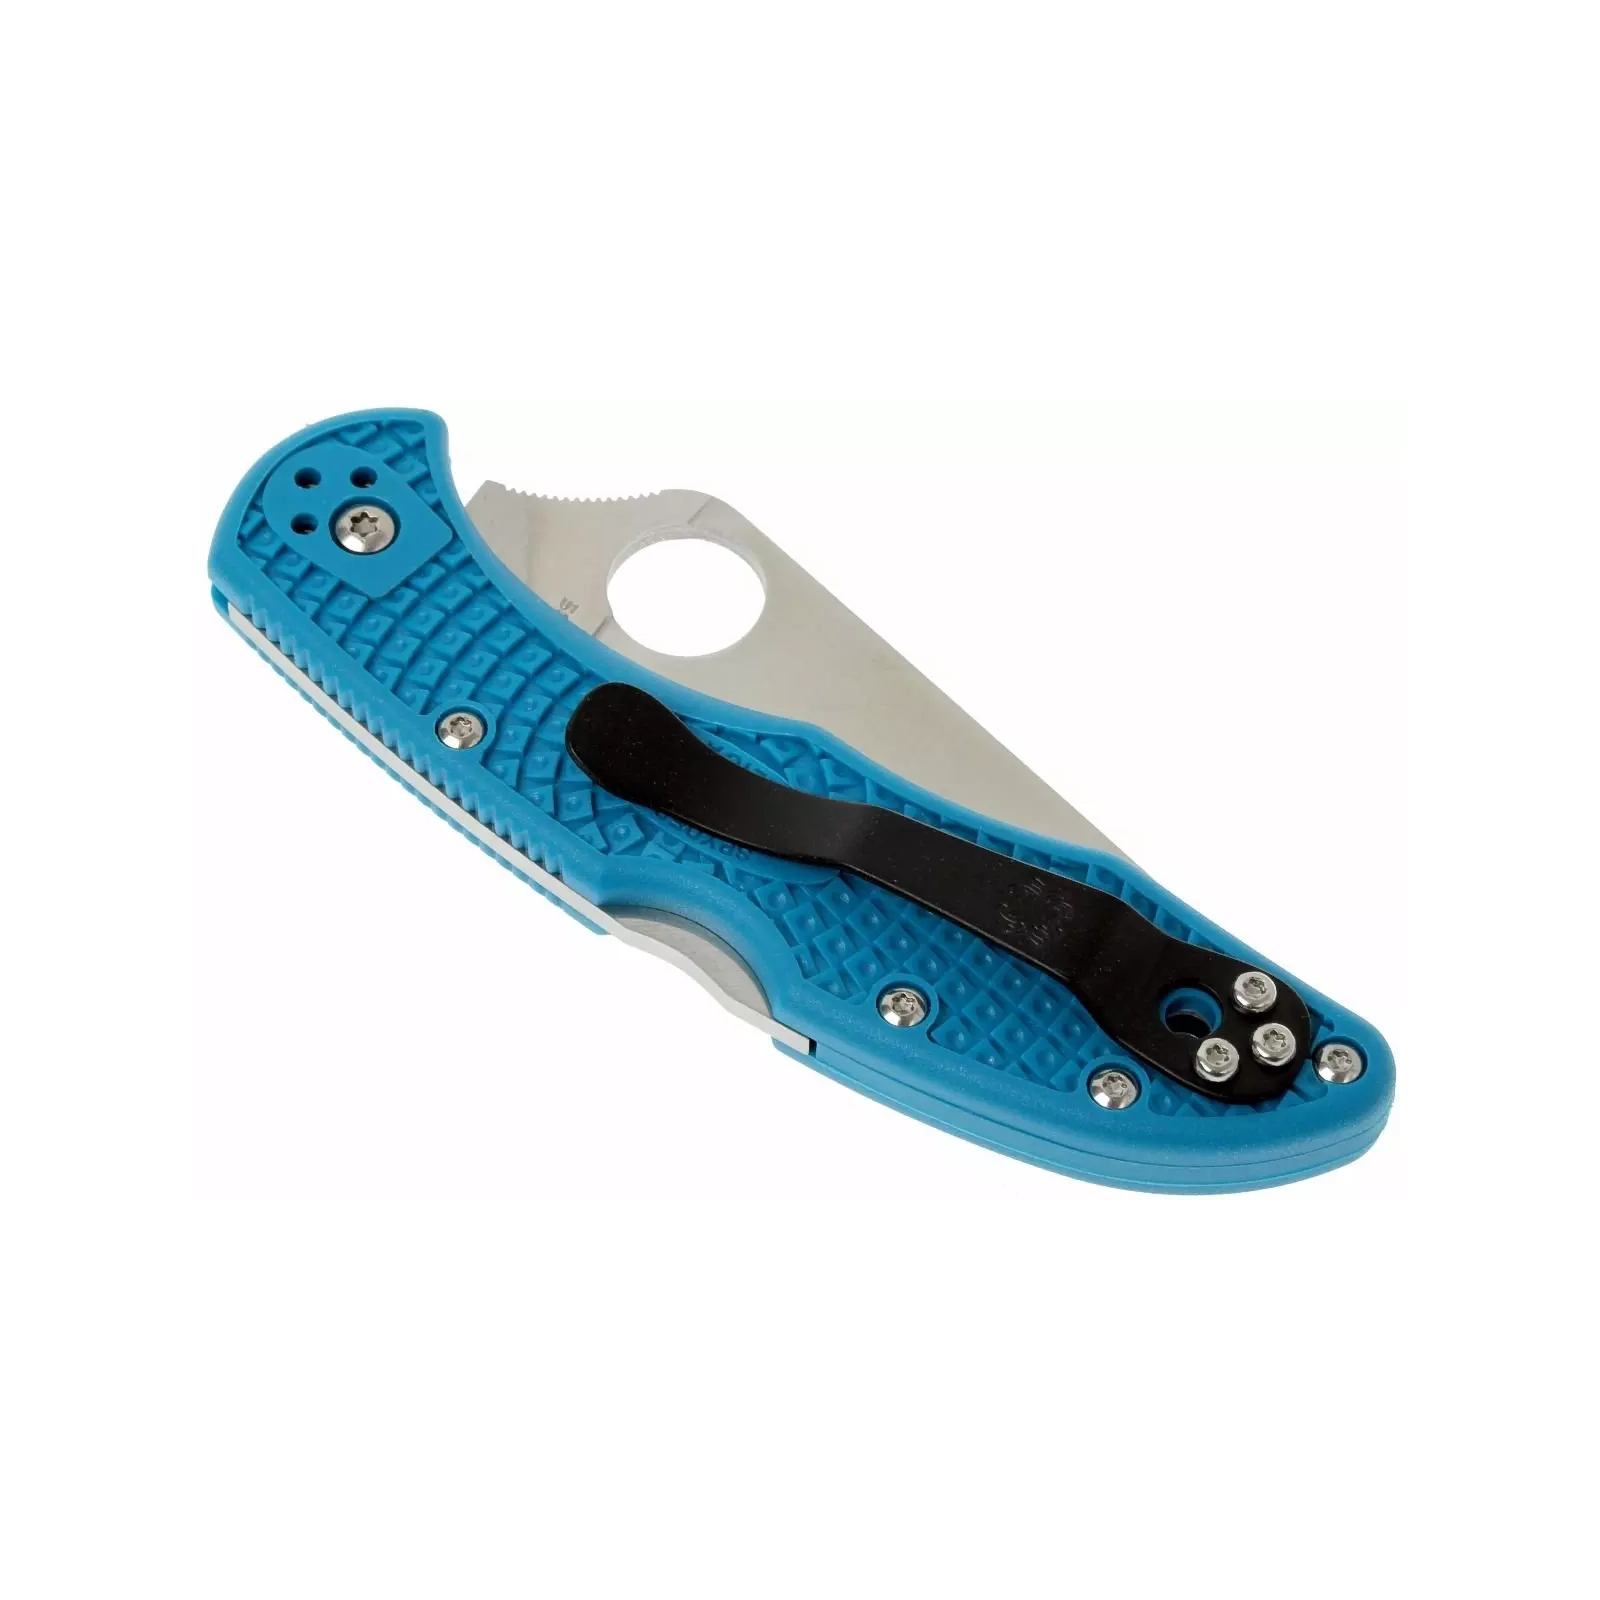 Нож Spyderco Delica 4 Flat Ground Blue (C11FPBL) изображение 6